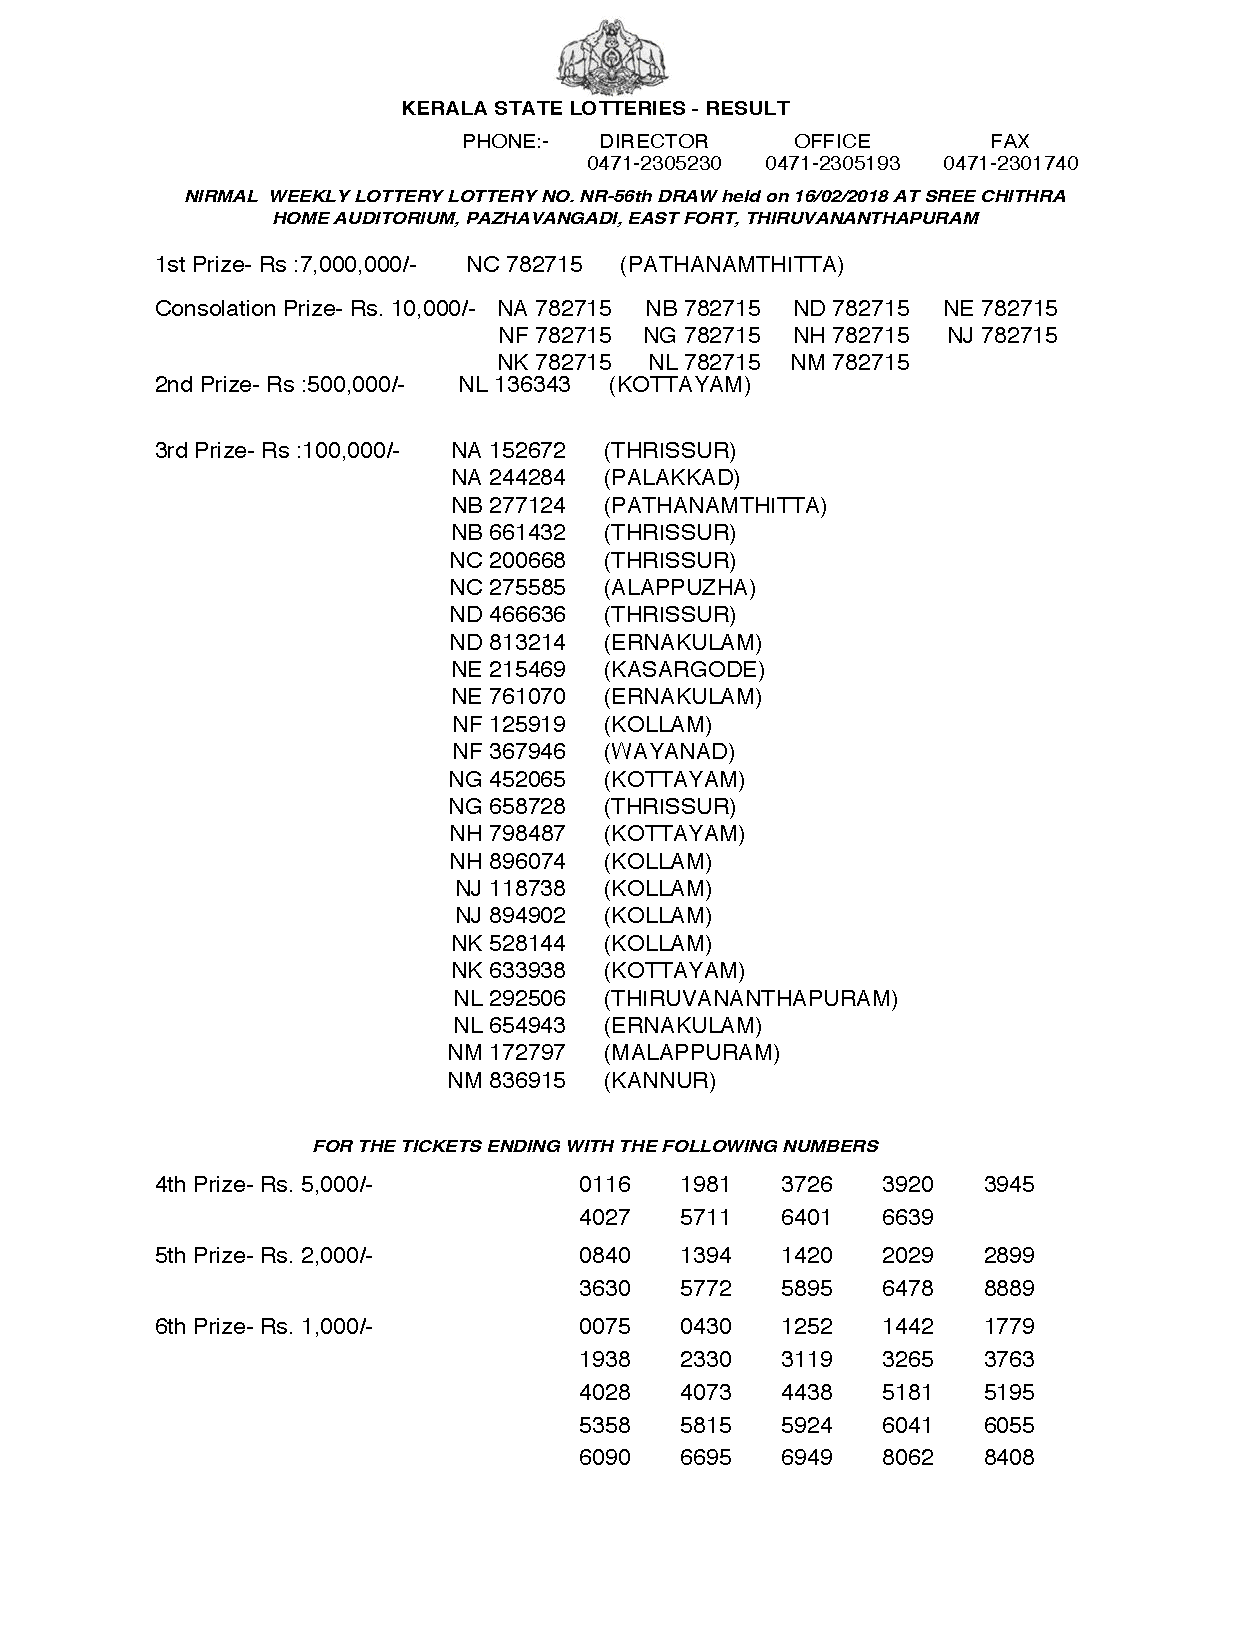 Nirmal NR 56 Kerala Lottery Results - Page 1